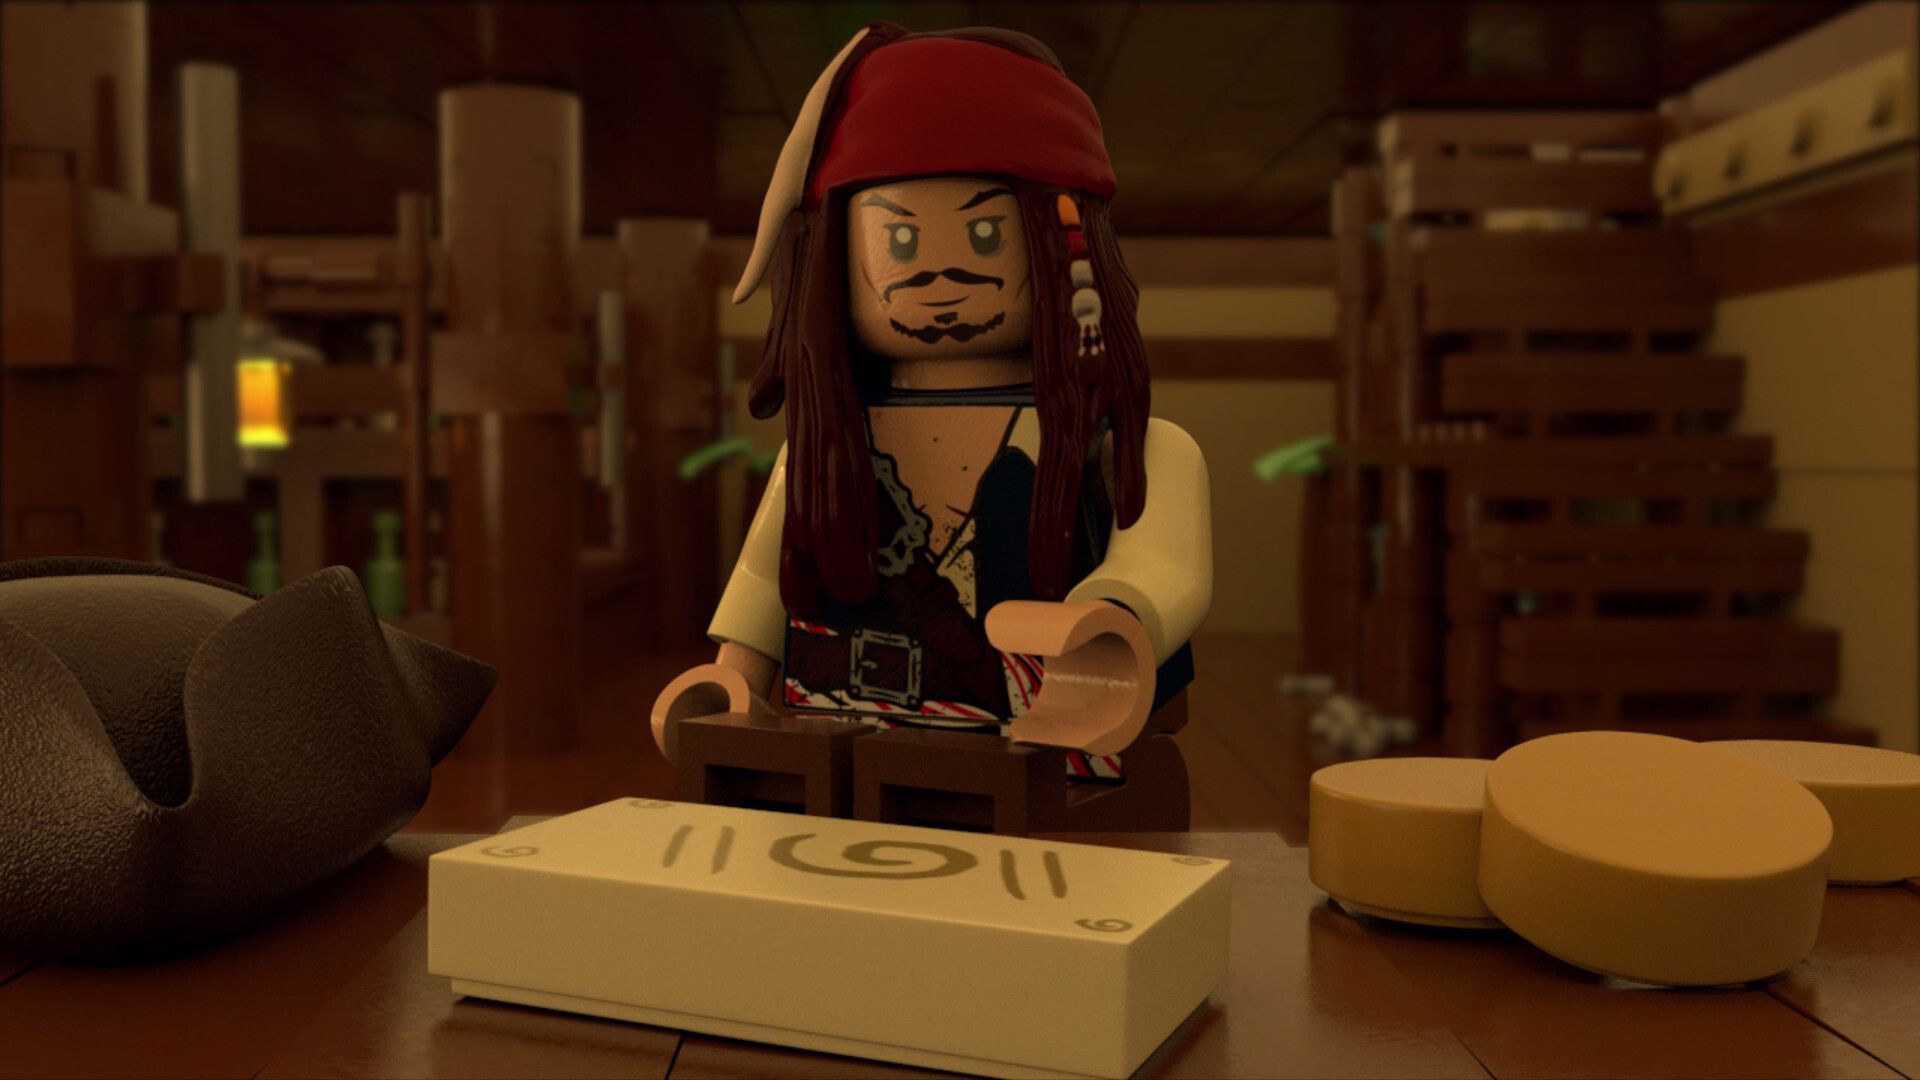 Lego Pirates of the caribbean short film, Sander Dumet